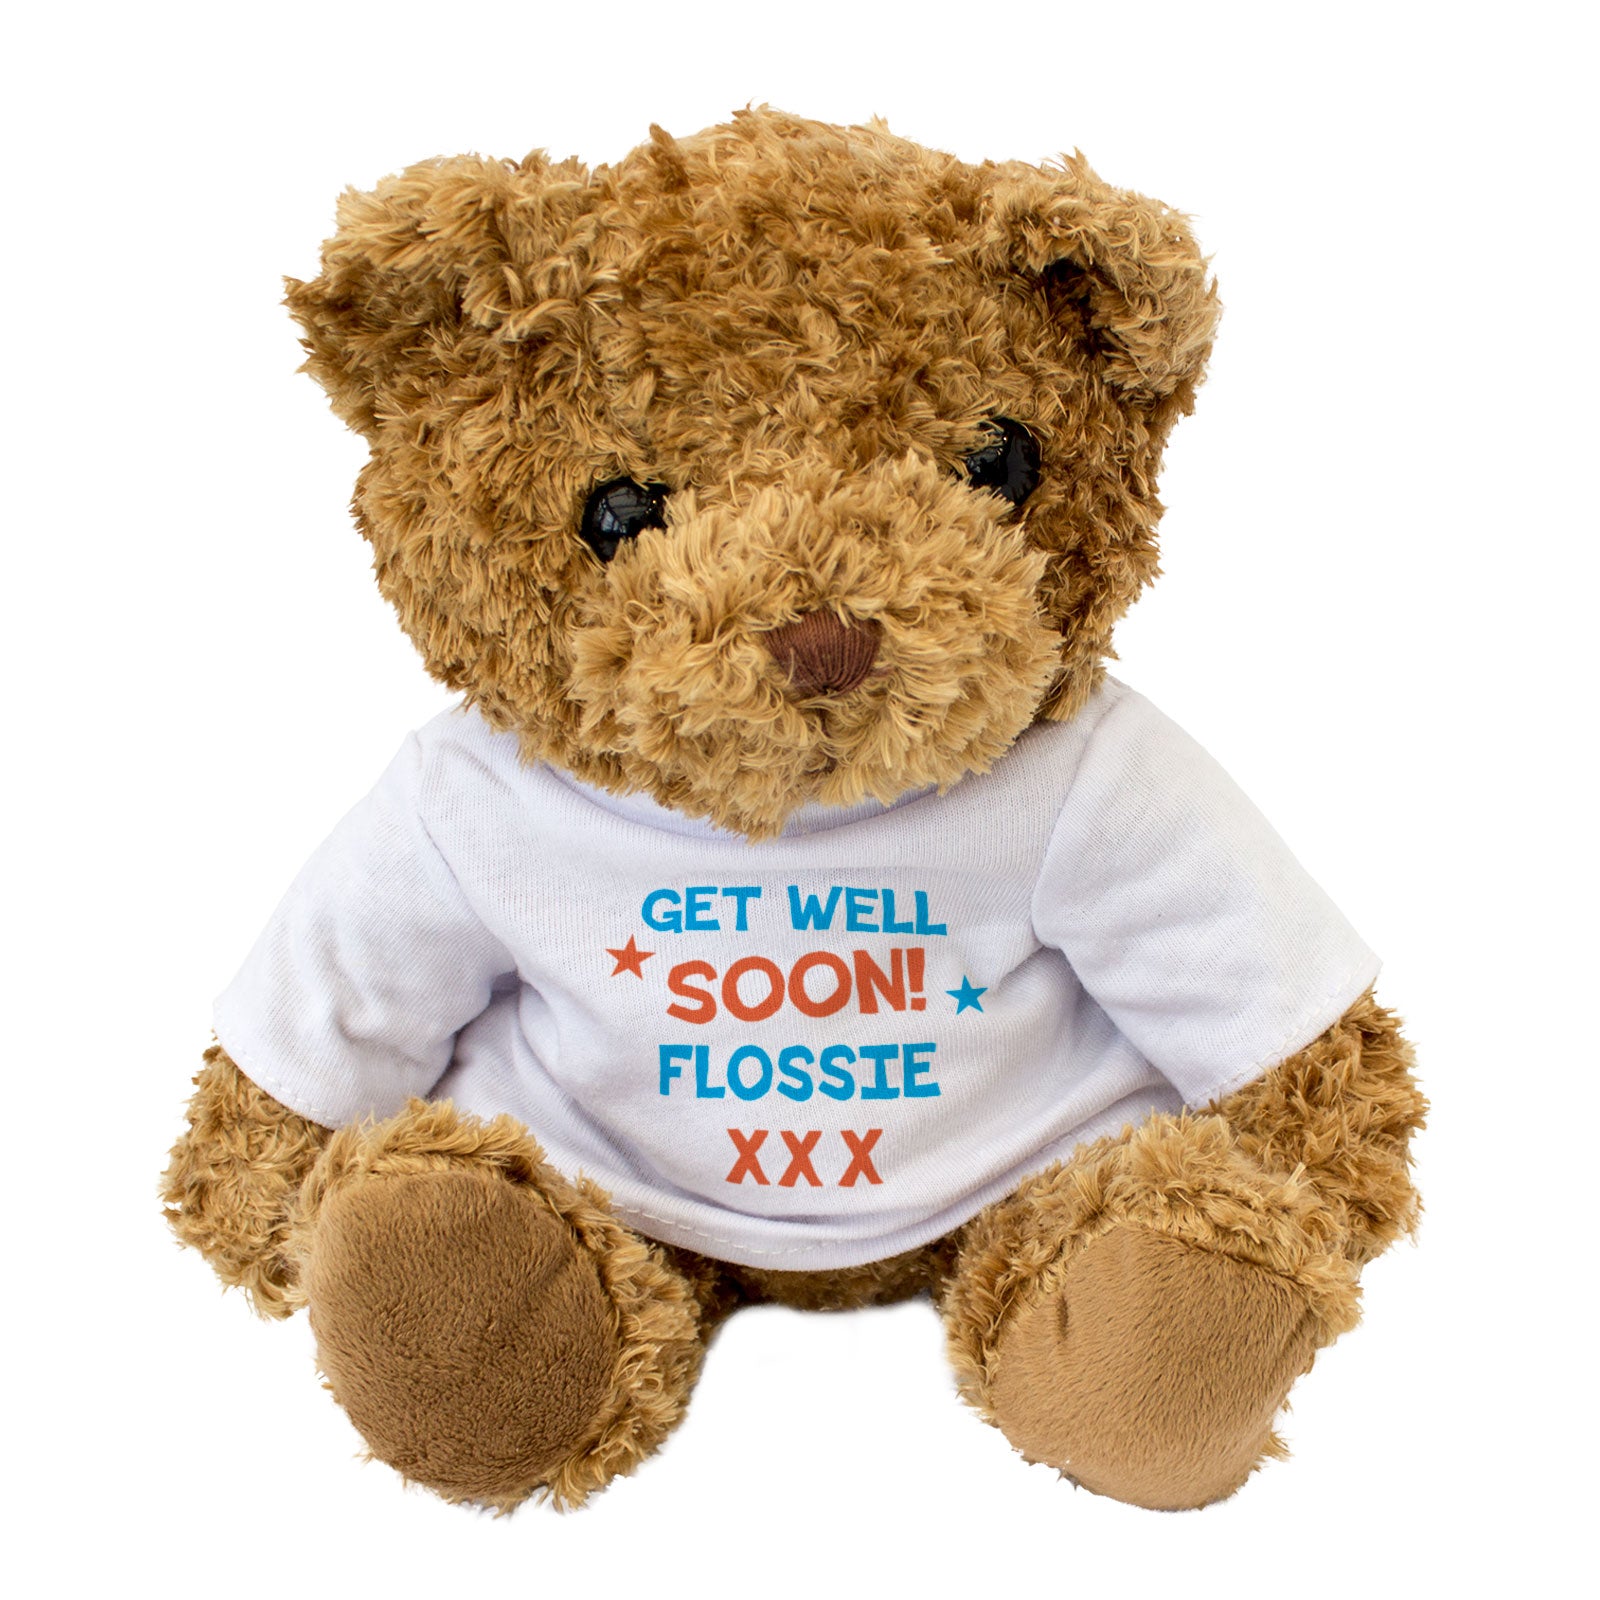 Get Well Soon Flossie - Teddy Bear